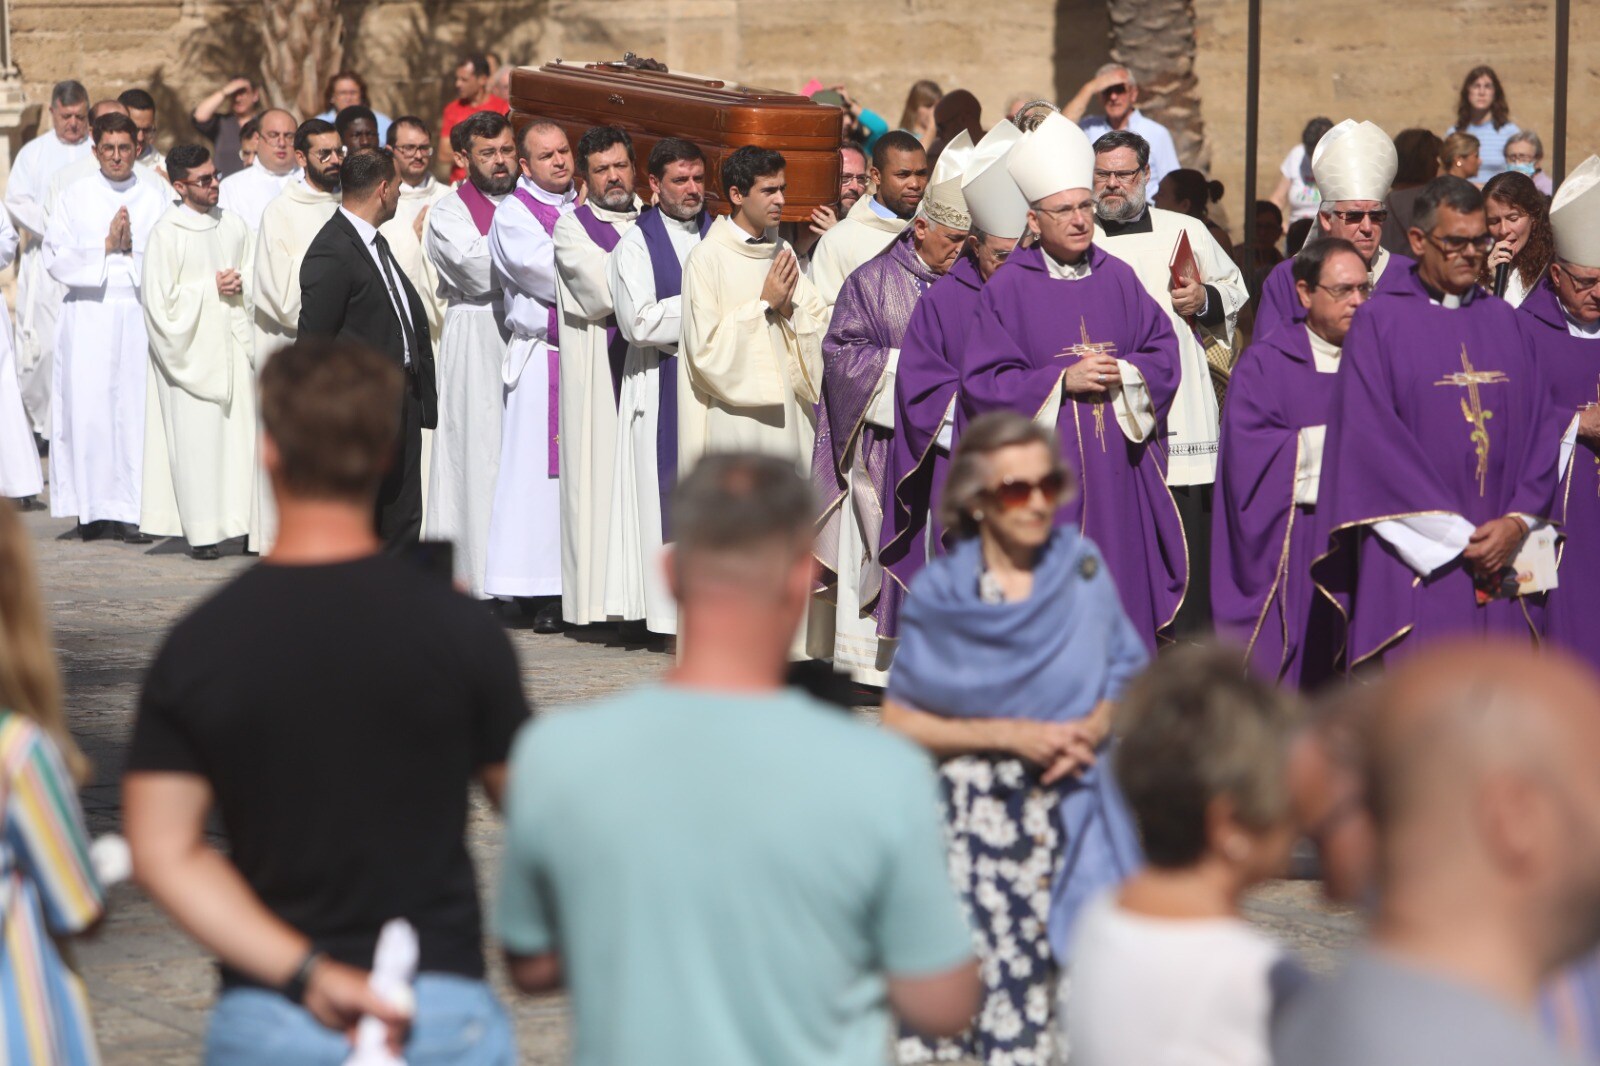 El obispo Ceballos ya descansa en la Catedral de Cádiz